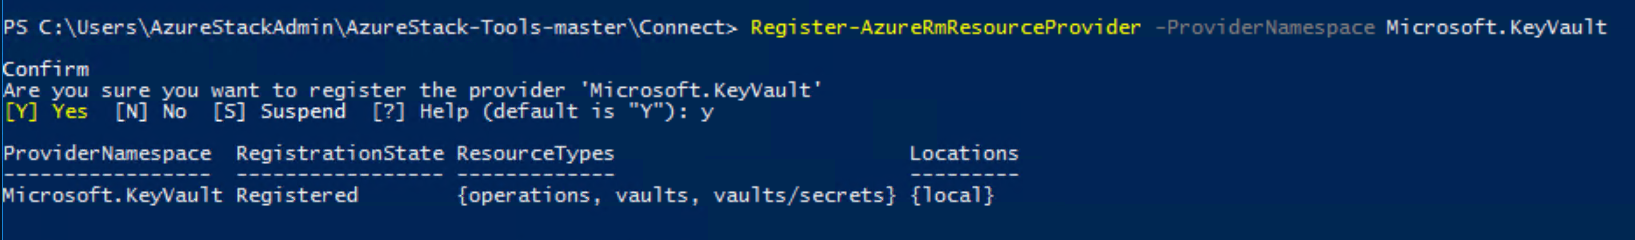 Key vault registration in Powershell successful (PowerShell でのキー コンテナーの登録に成功しました)